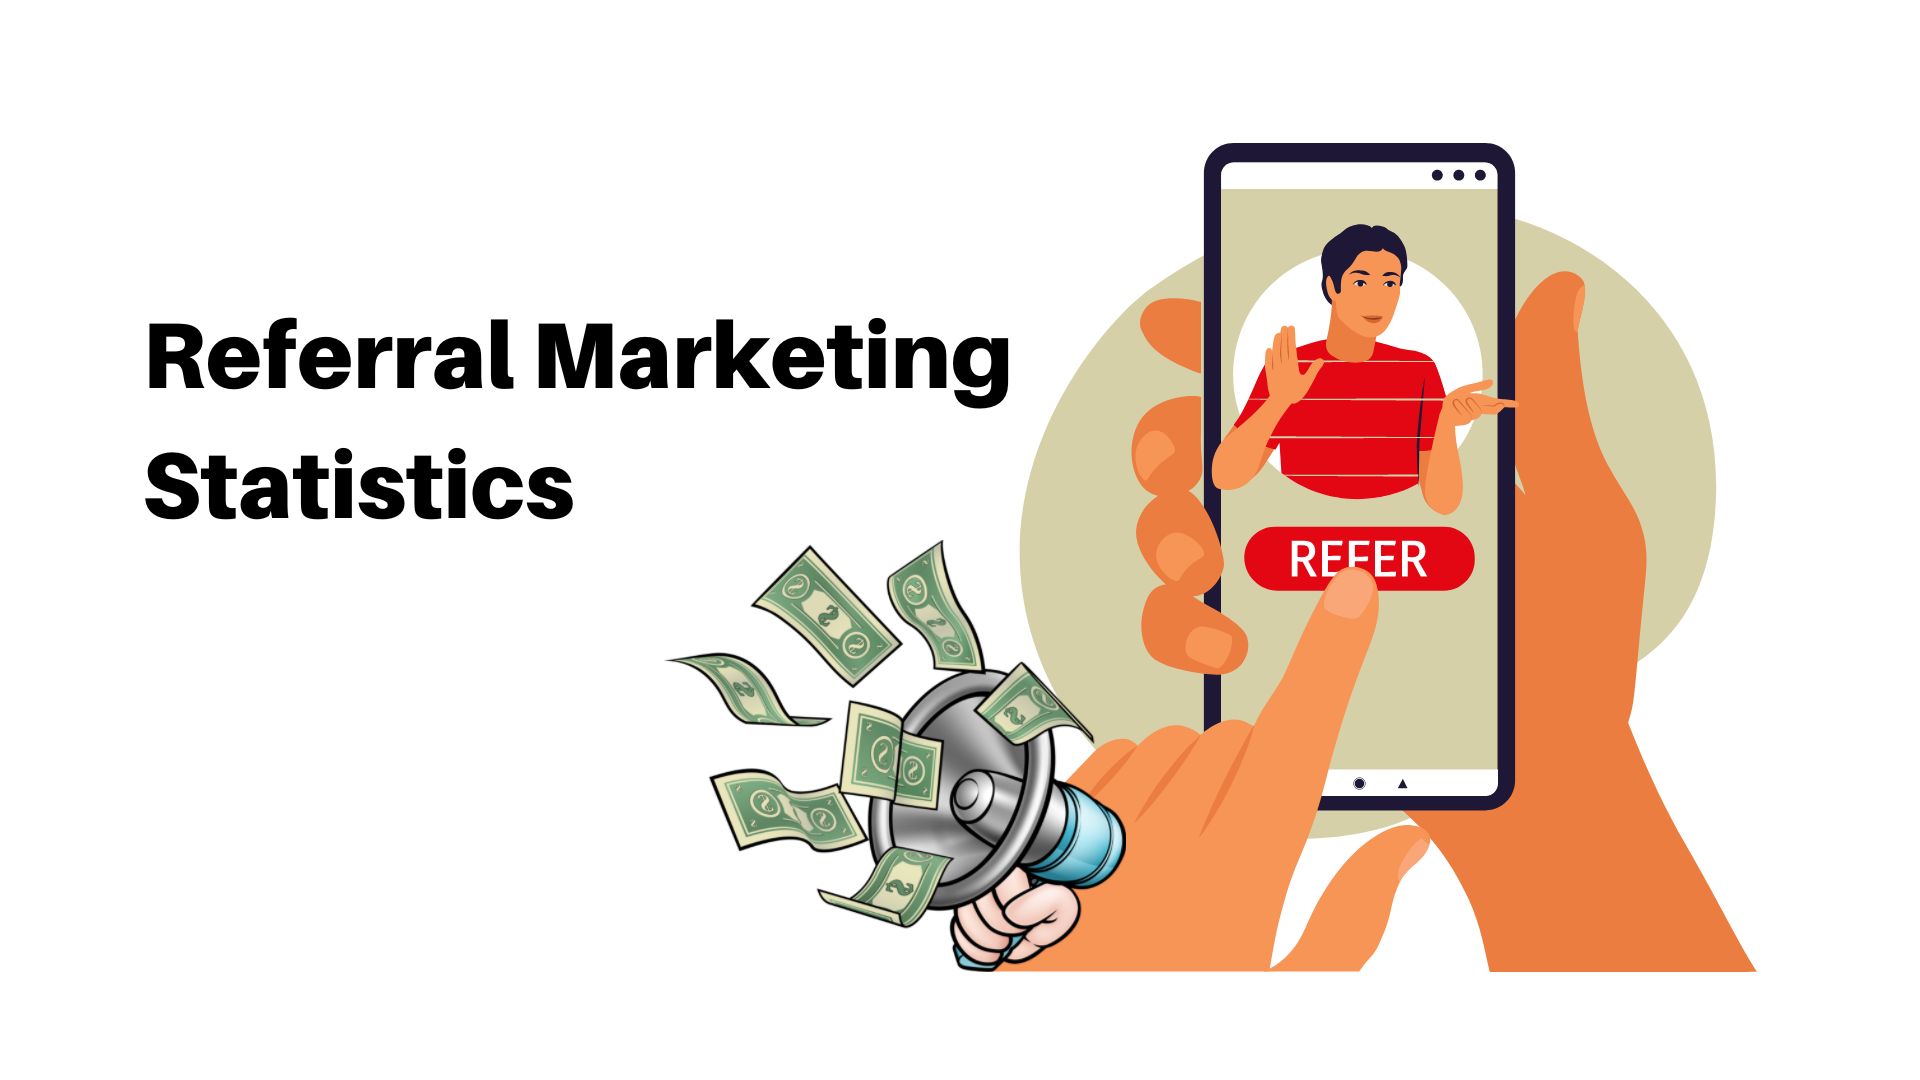 Referral Marketing Statistics By Consumer Behavior and Reward Type